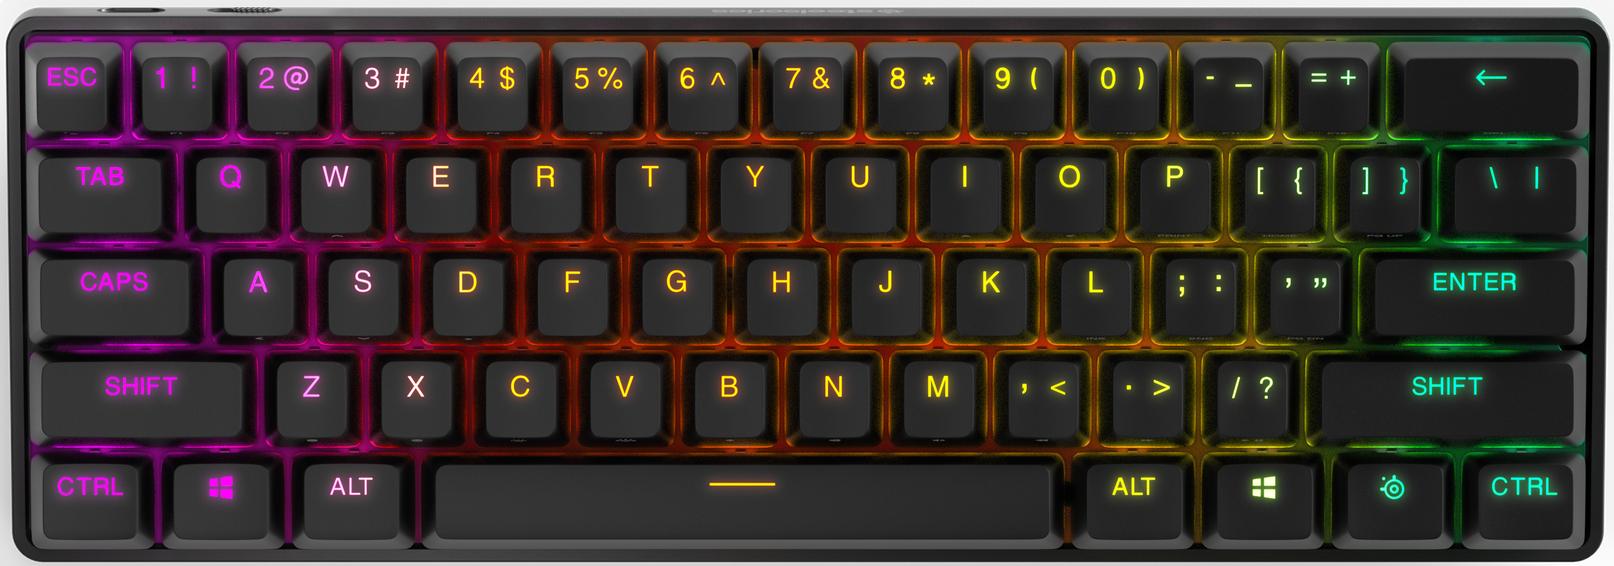 Apex Pro Mini Wireless Gaming Keyboard Unboxing - ASMR 